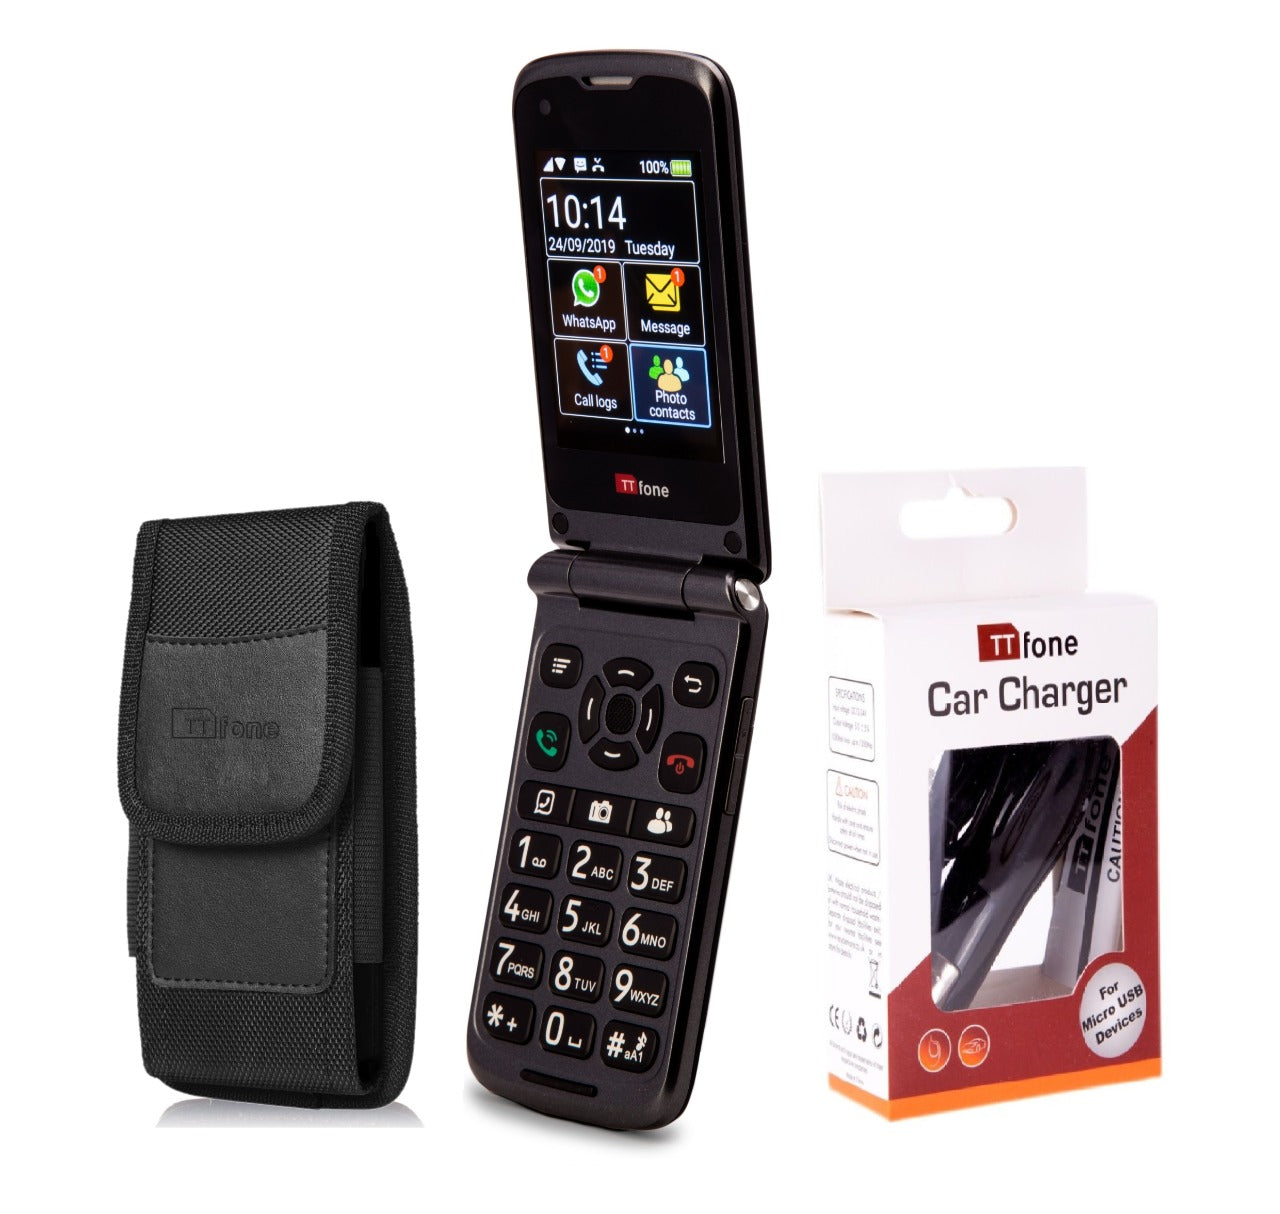 Bundle offer for TTfone Titan TT950 Touchscreen WhatsApp Flip Senior Mobile with Nylon Holster Case (TTCB9) and Car Charger (TTCC), Vodafone Pay As You Go